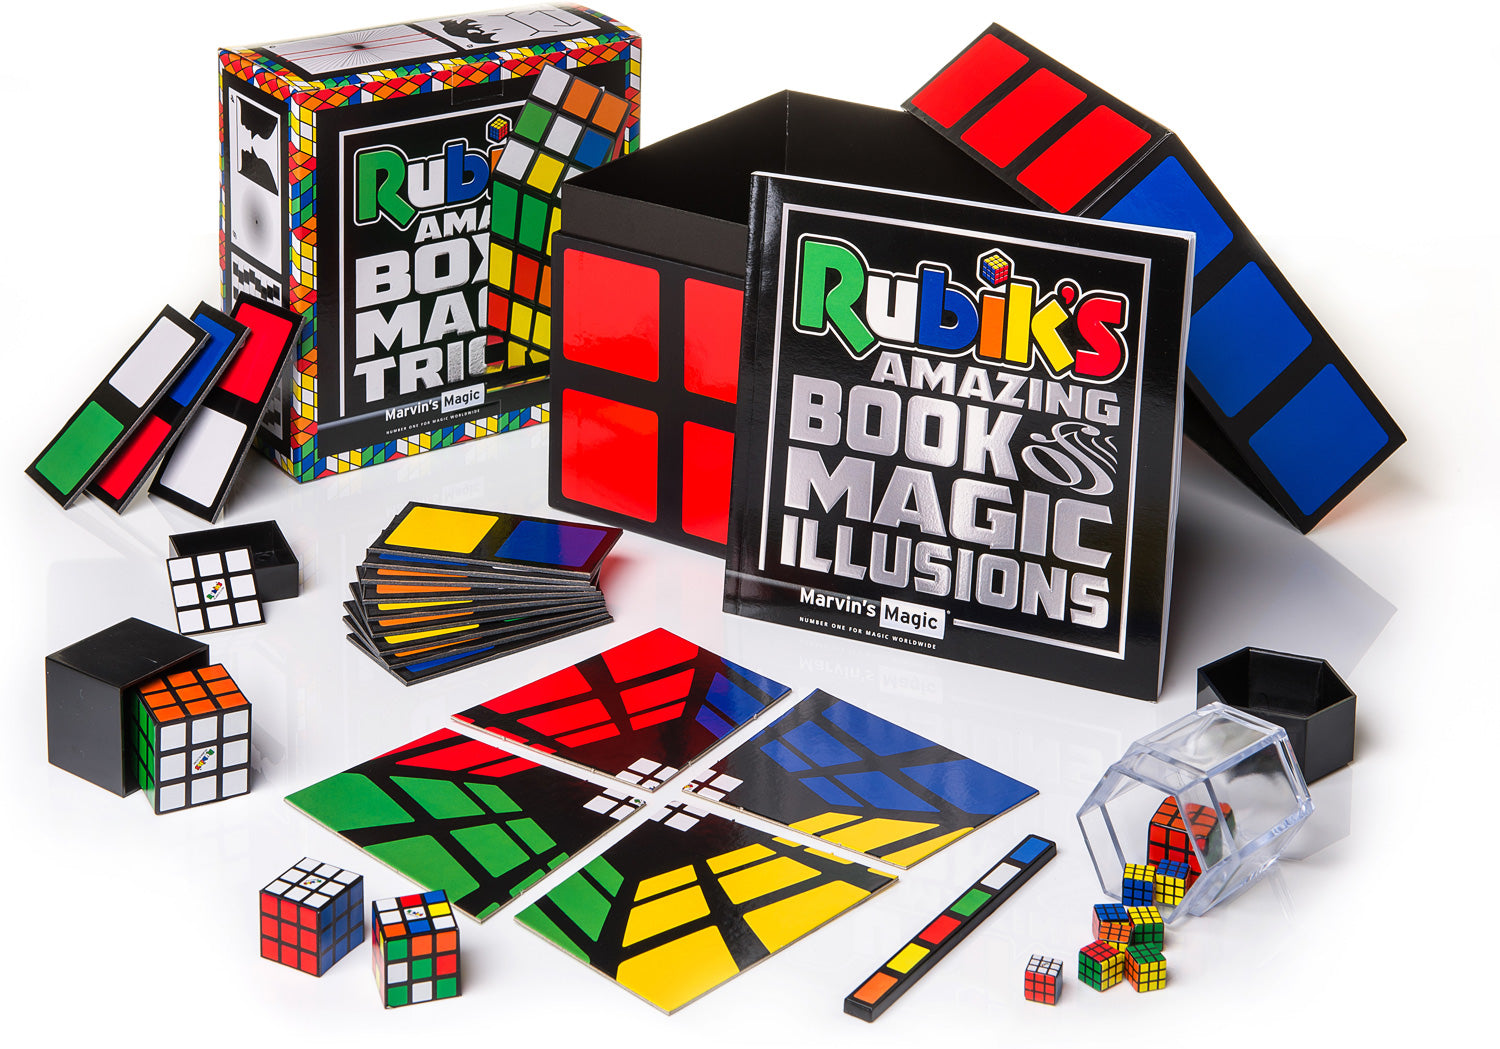 Rubik’s Amazing Box of Tricks by Marvin’s Magic